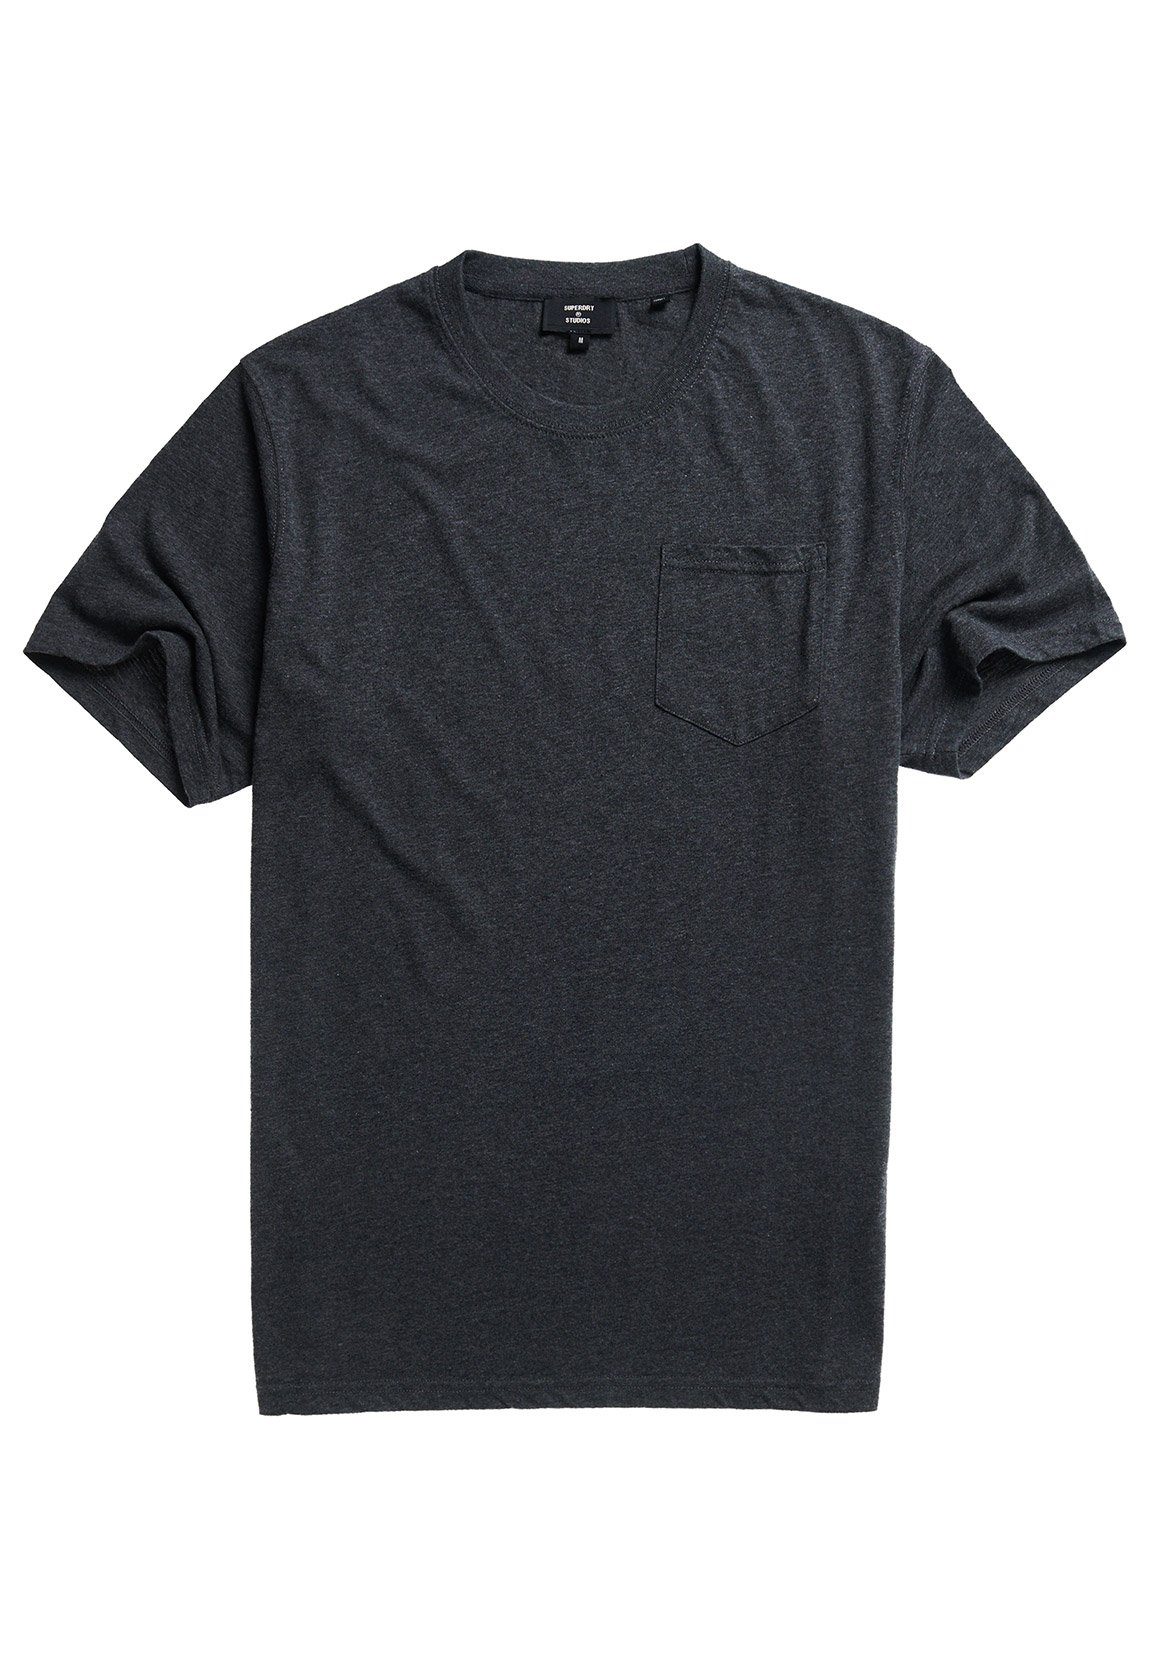 T-Shirt COTTON Superdry T-Shirt Marl TEE AUTHENTIC Charcoal Superdry Herren Dunkelgrau